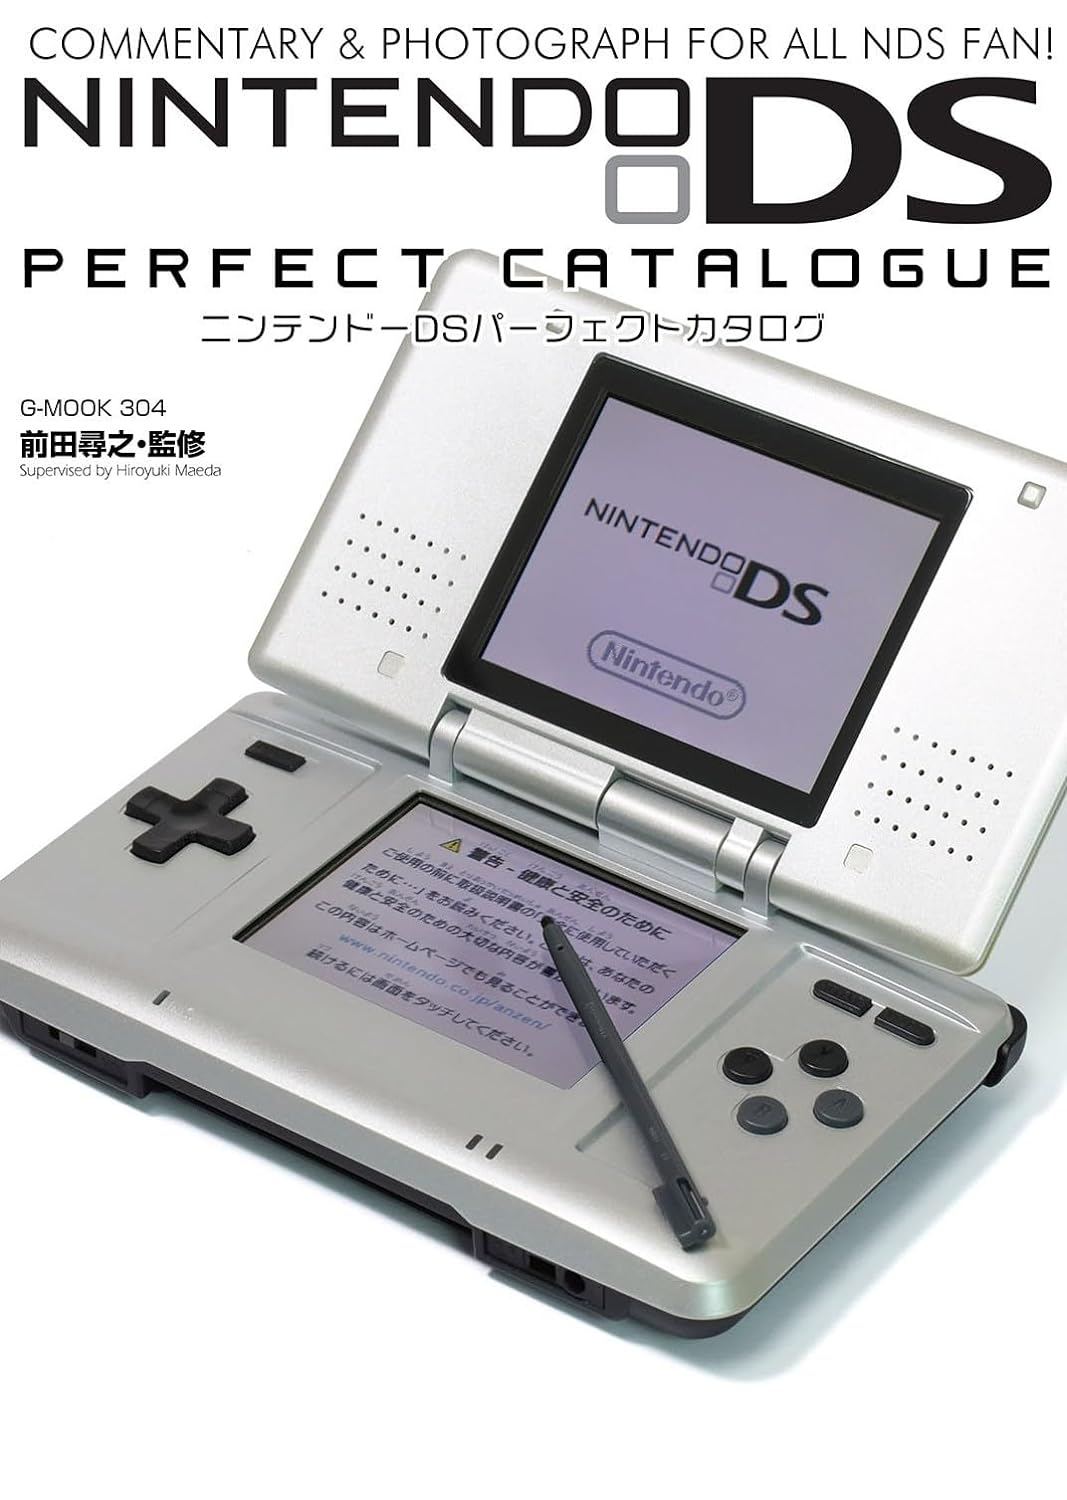 Nintendo DS Perfect Catalog